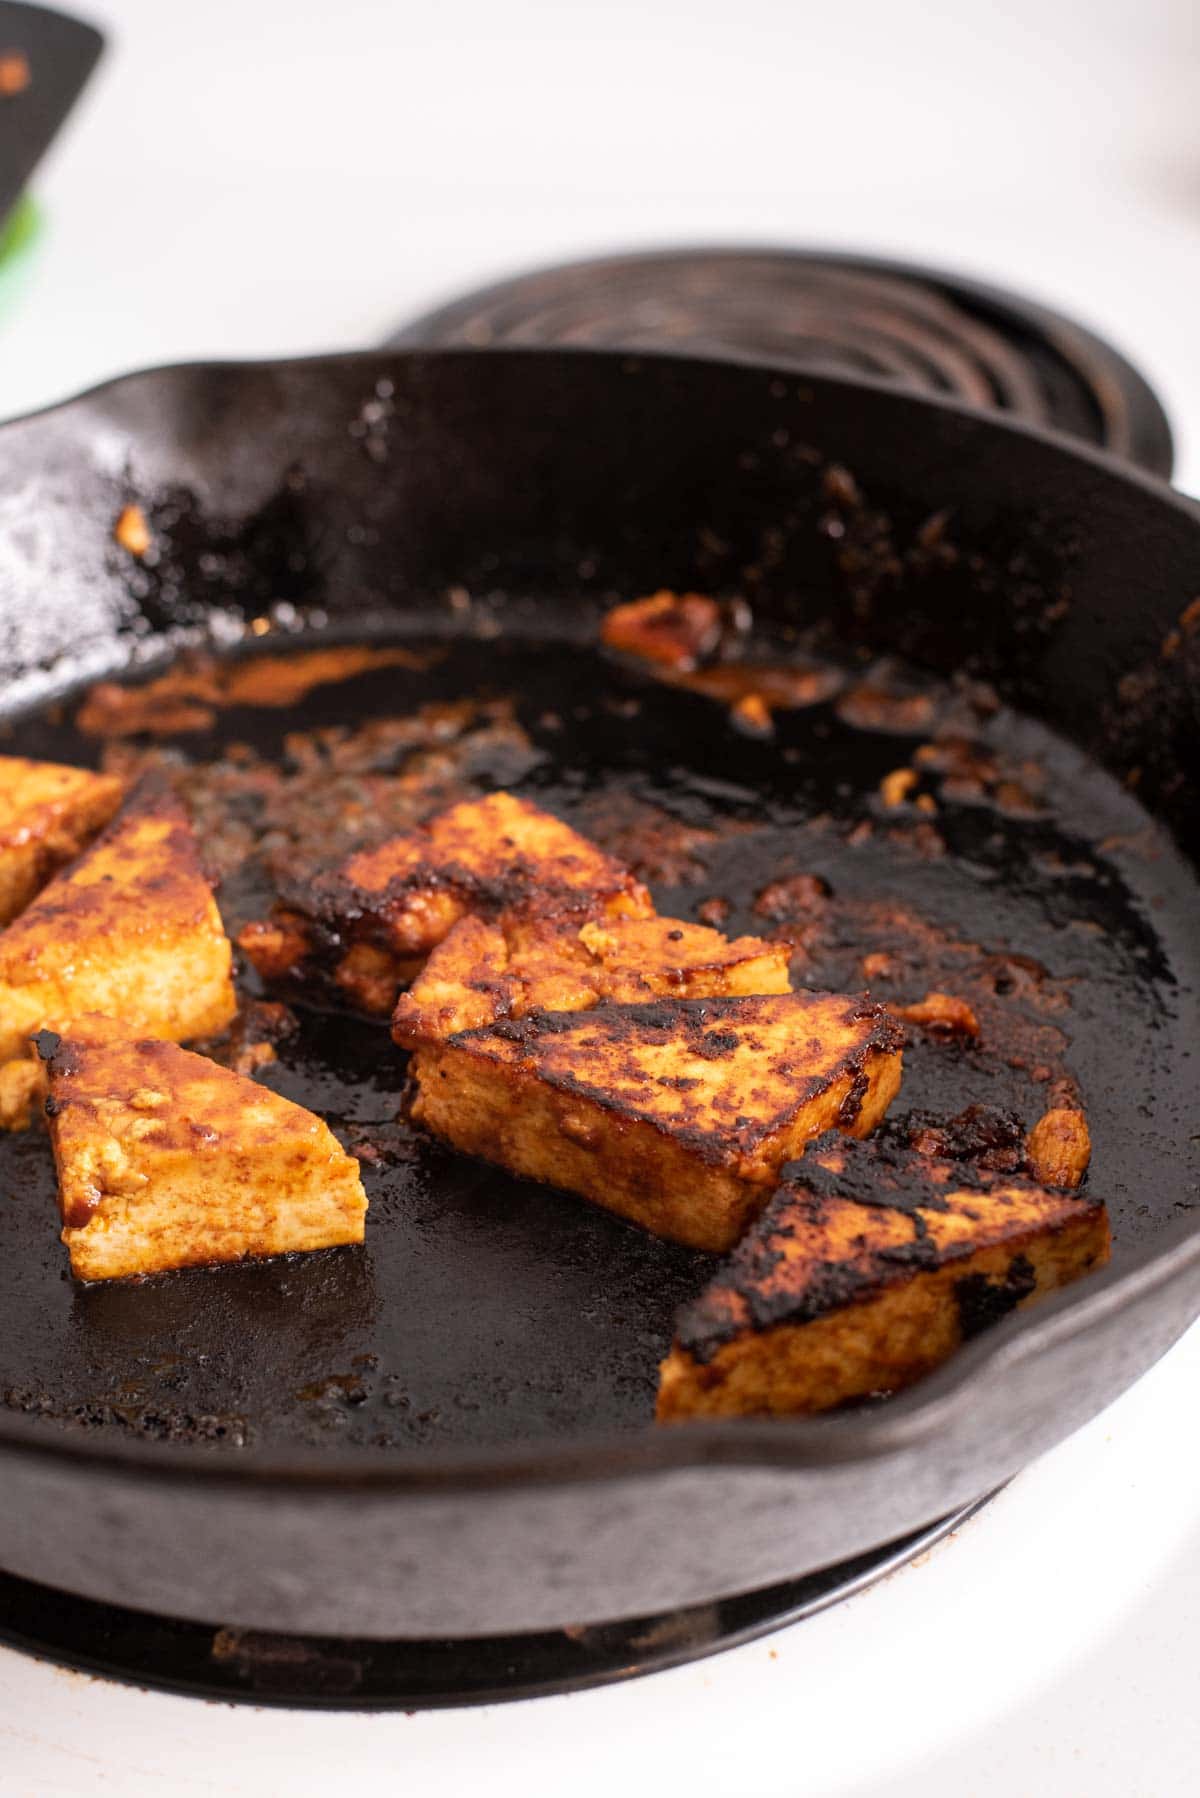 Charred tofu in a cast iron pan.